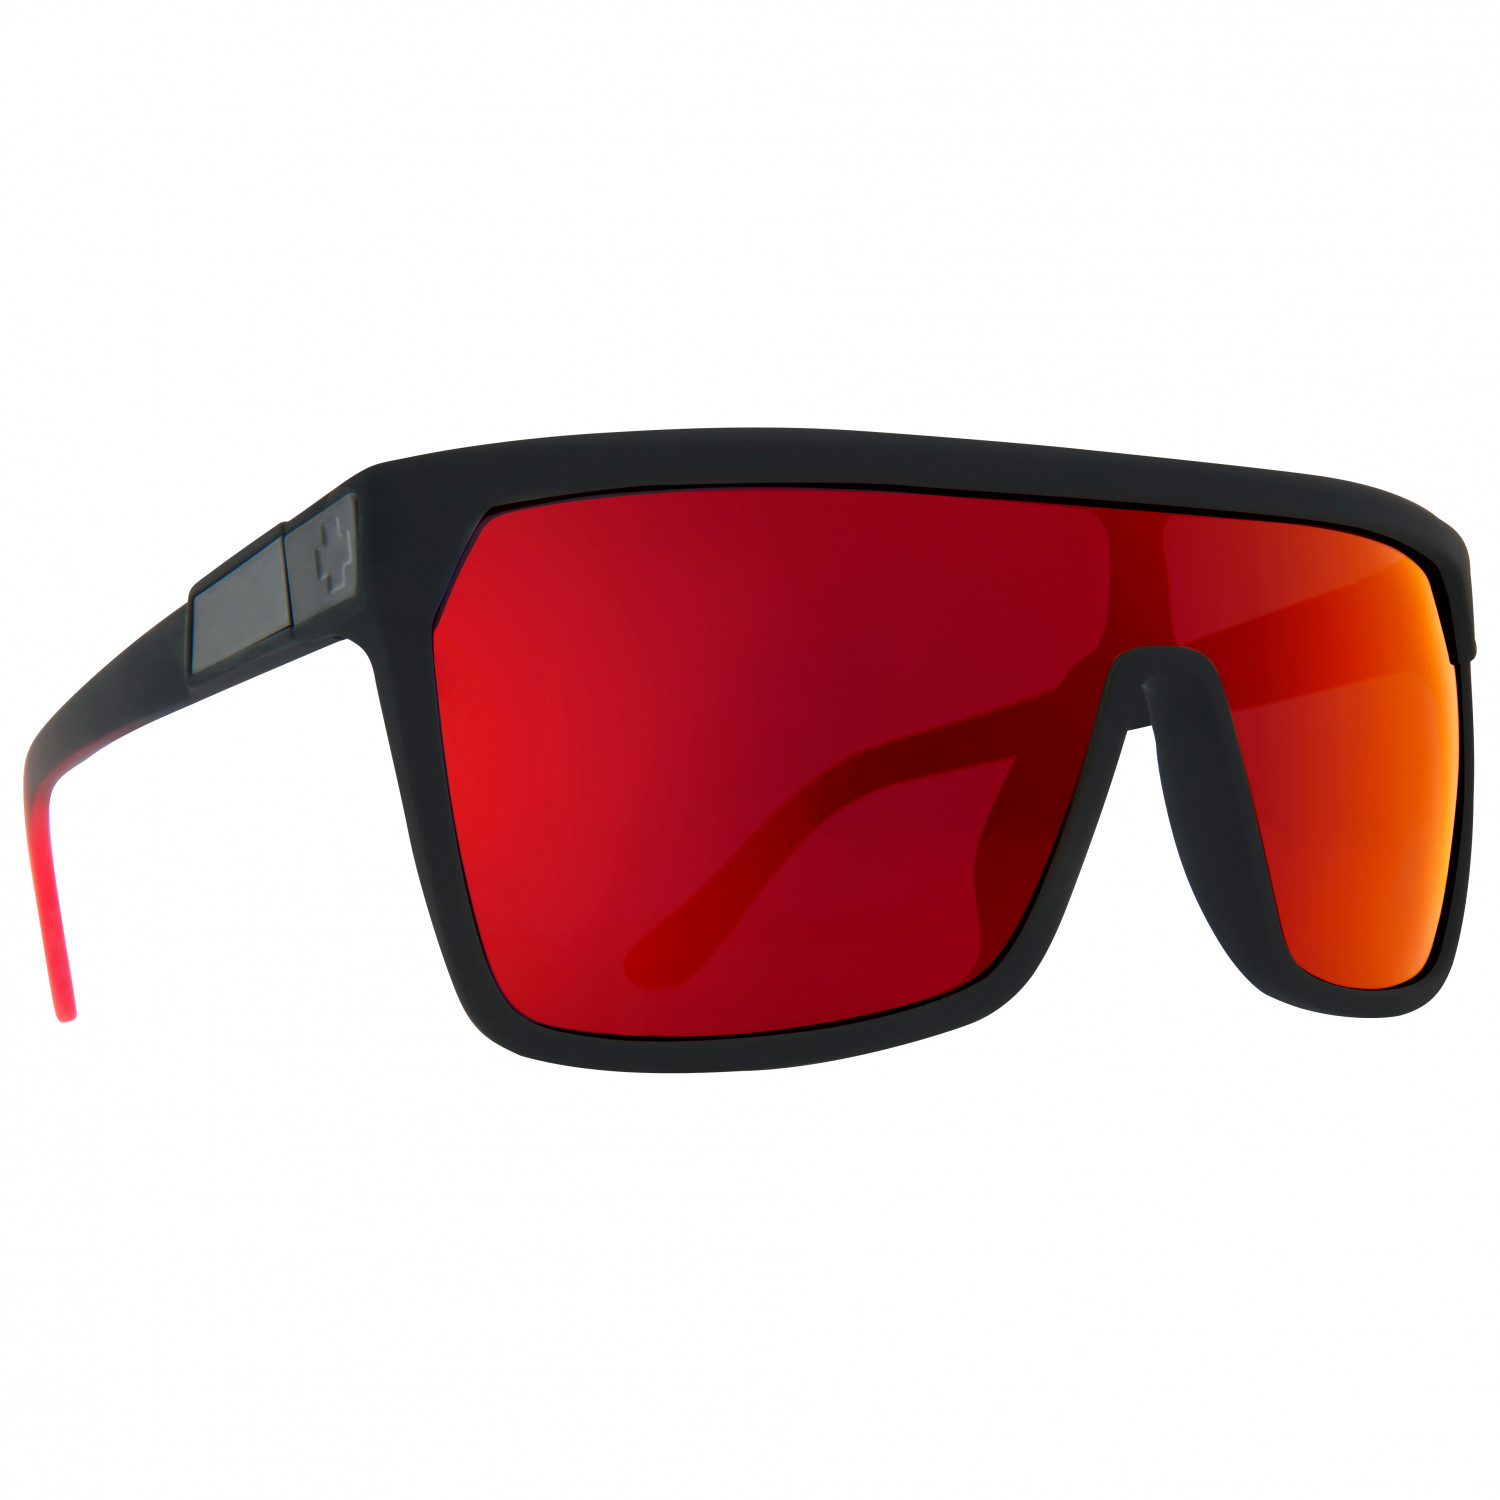 Солнцезащитные очки Spy+ Flynn S3 (VLT 15%), цвет Soft Matte Black Red Fade солнцезащитные очки flynn spy optic цвет matte ebony ivory hd plus gray green